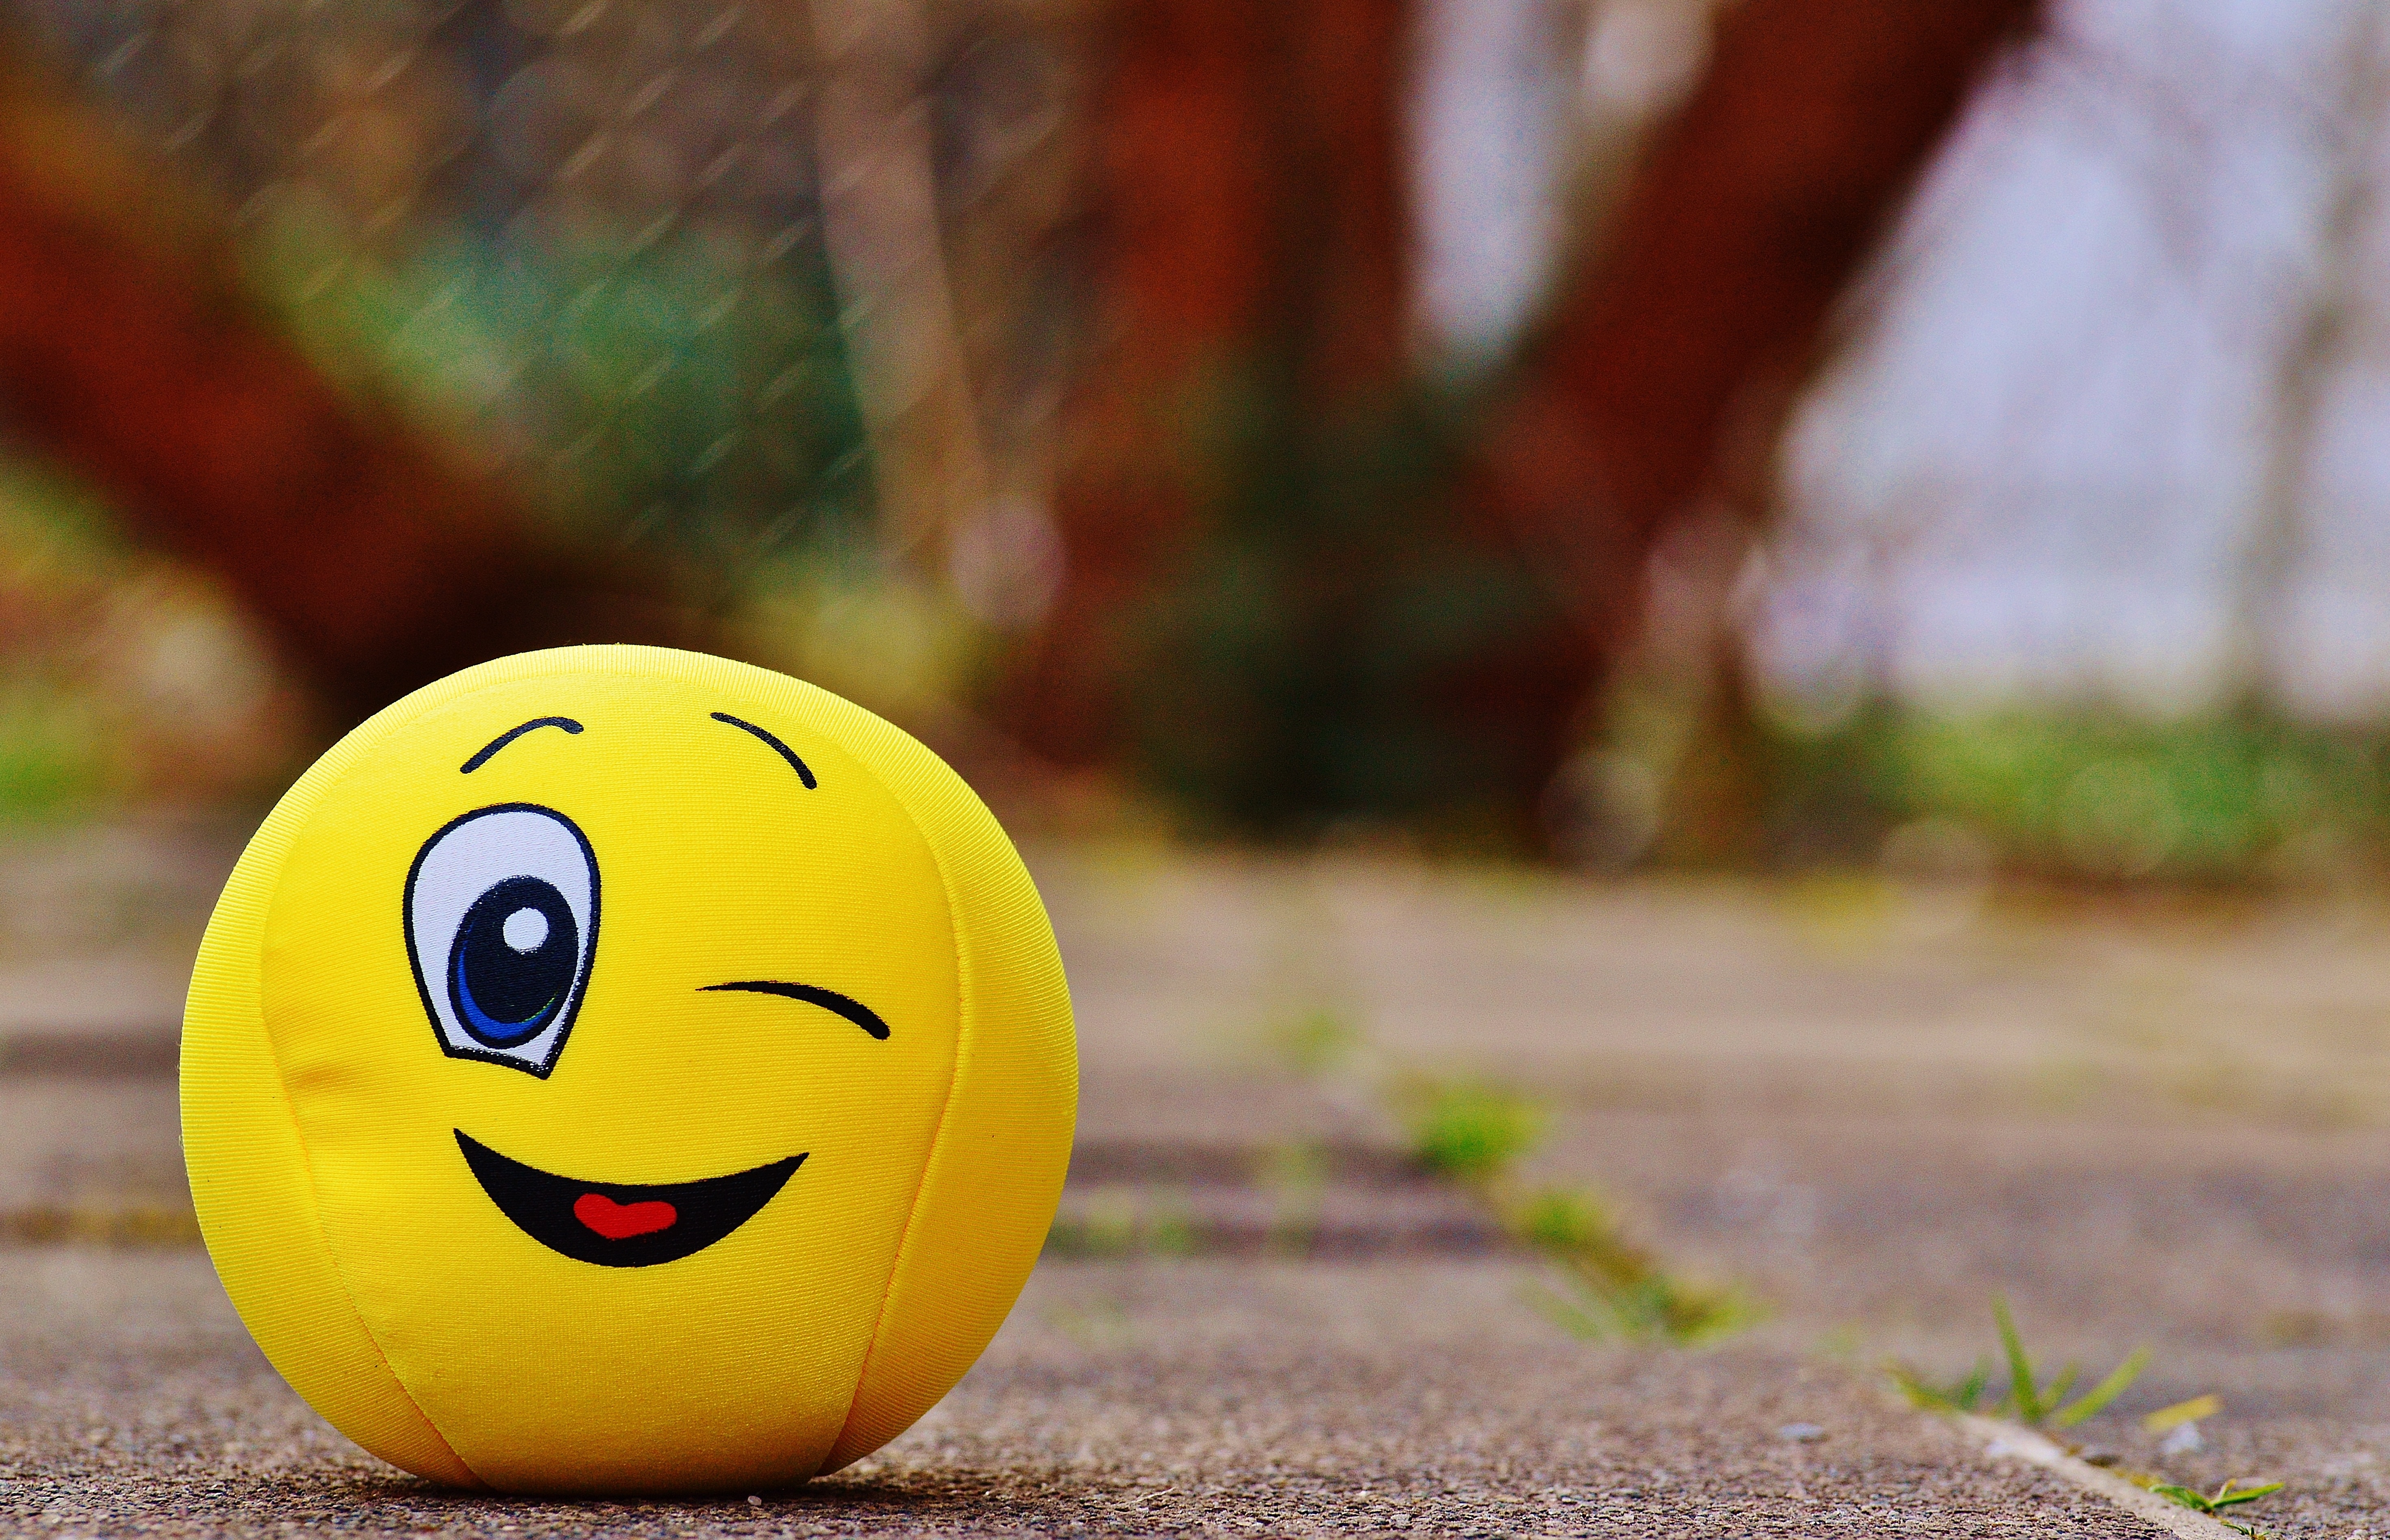 Winking Smiley Ball Plush Toy On Concrete Pavement Image